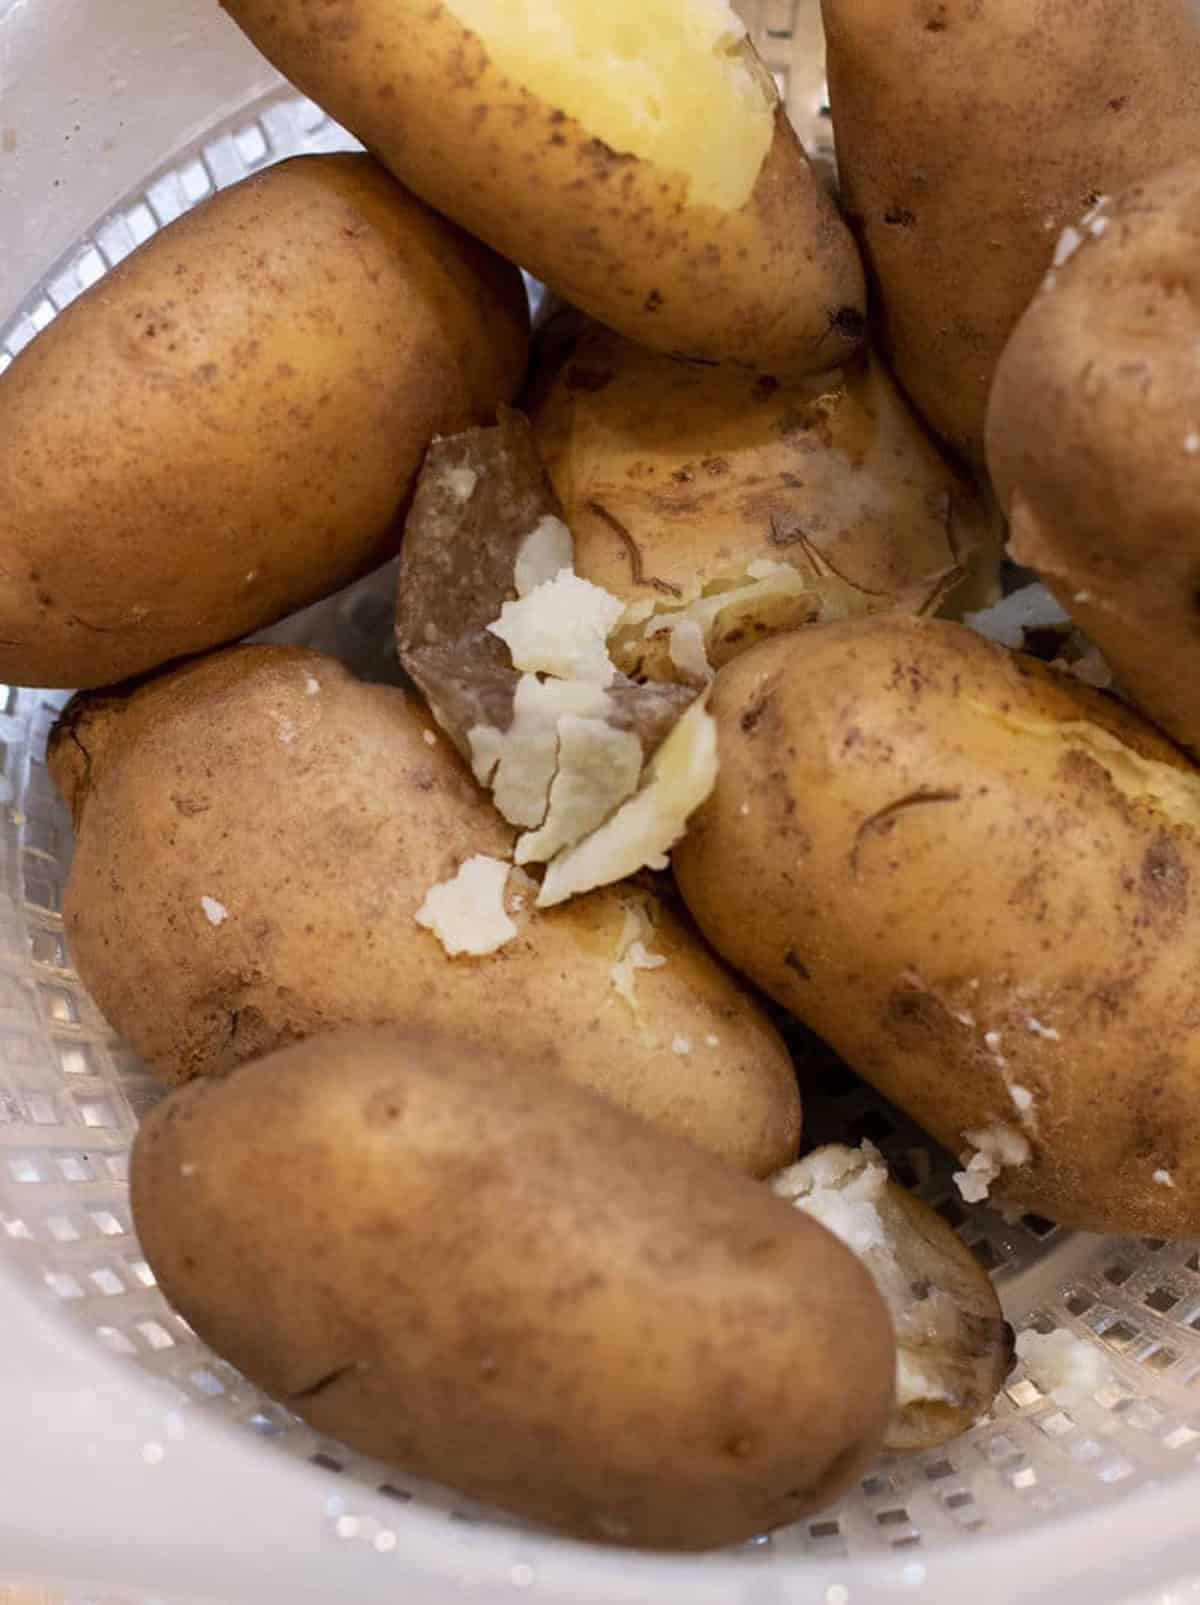 Cooked Idaho Potatoes ready to be peeled.